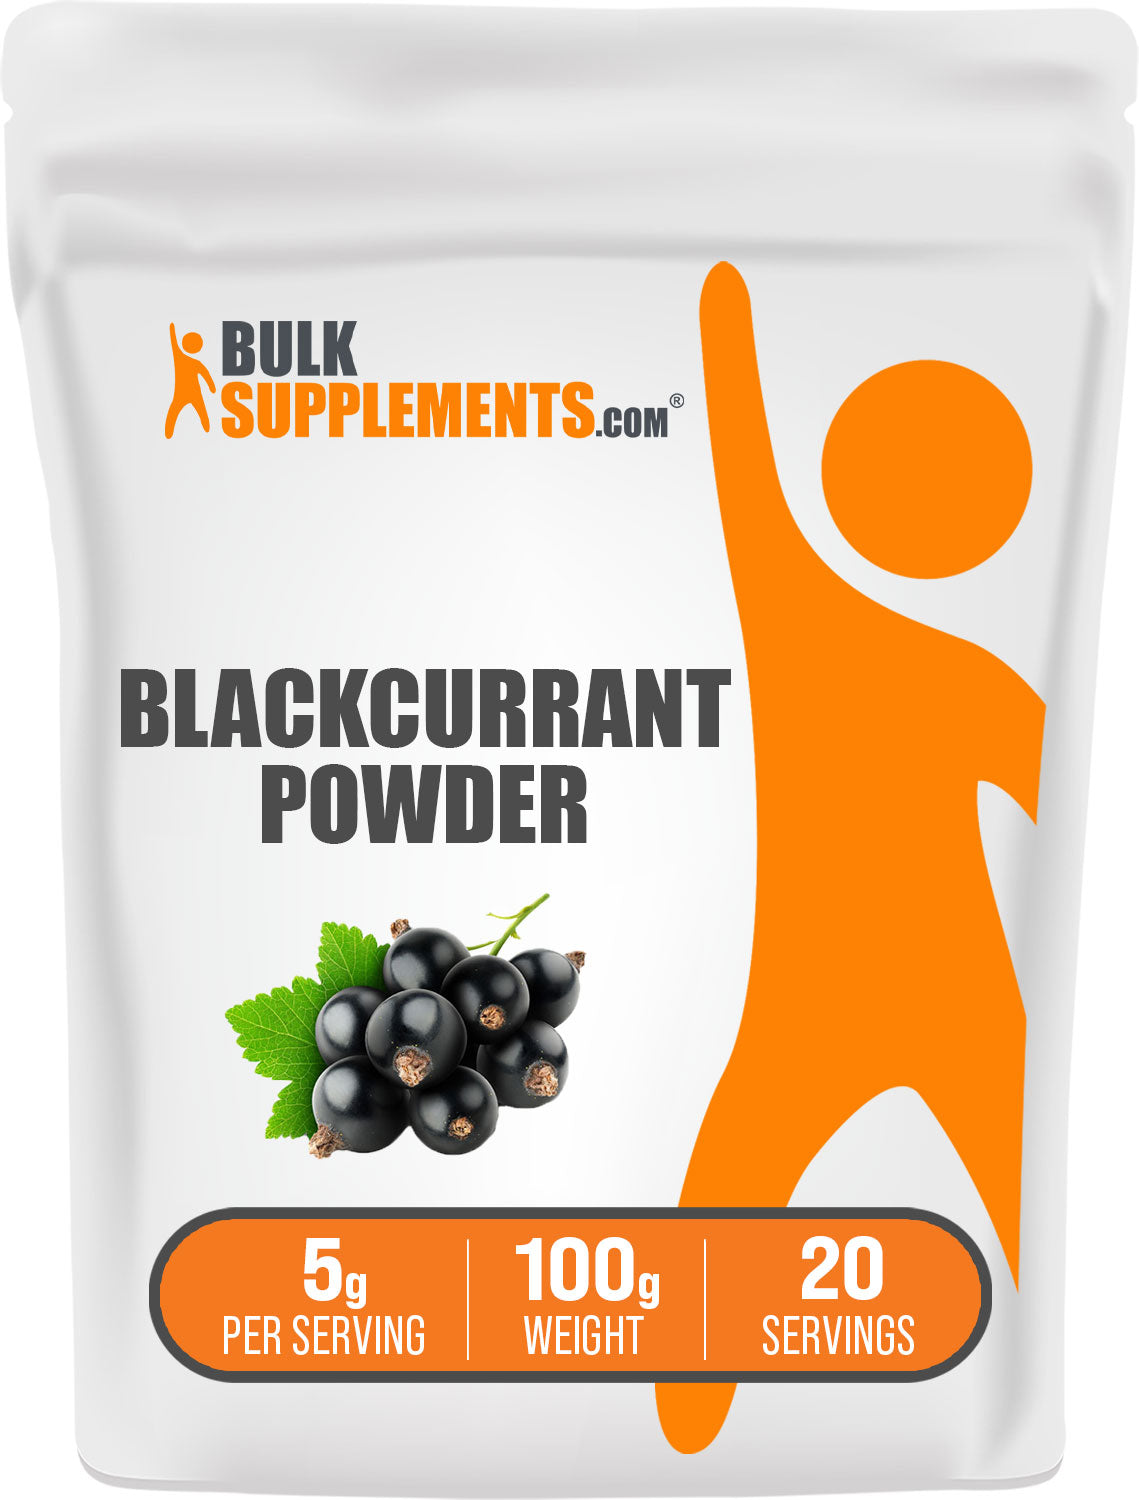 100g of Blackcurrant Powder